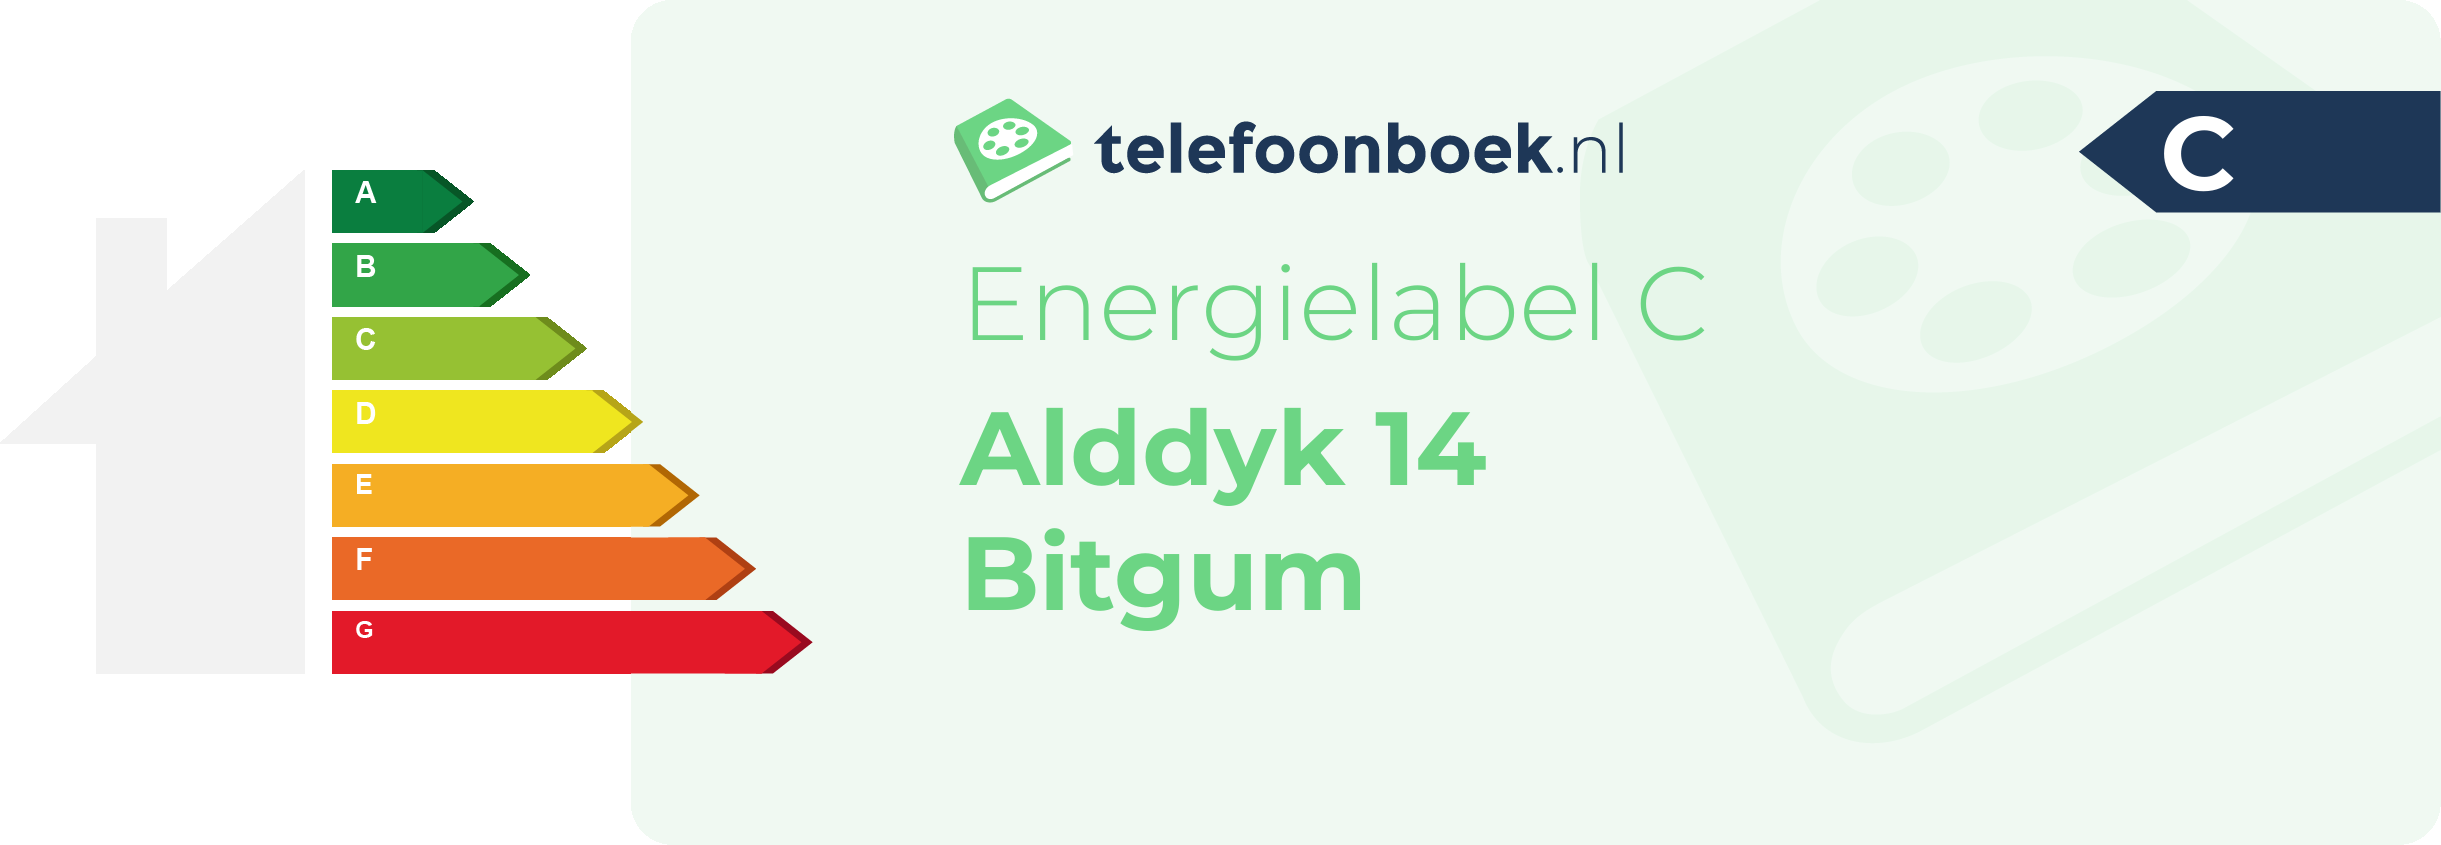 Energielabel Alddyk 14 Bitgum